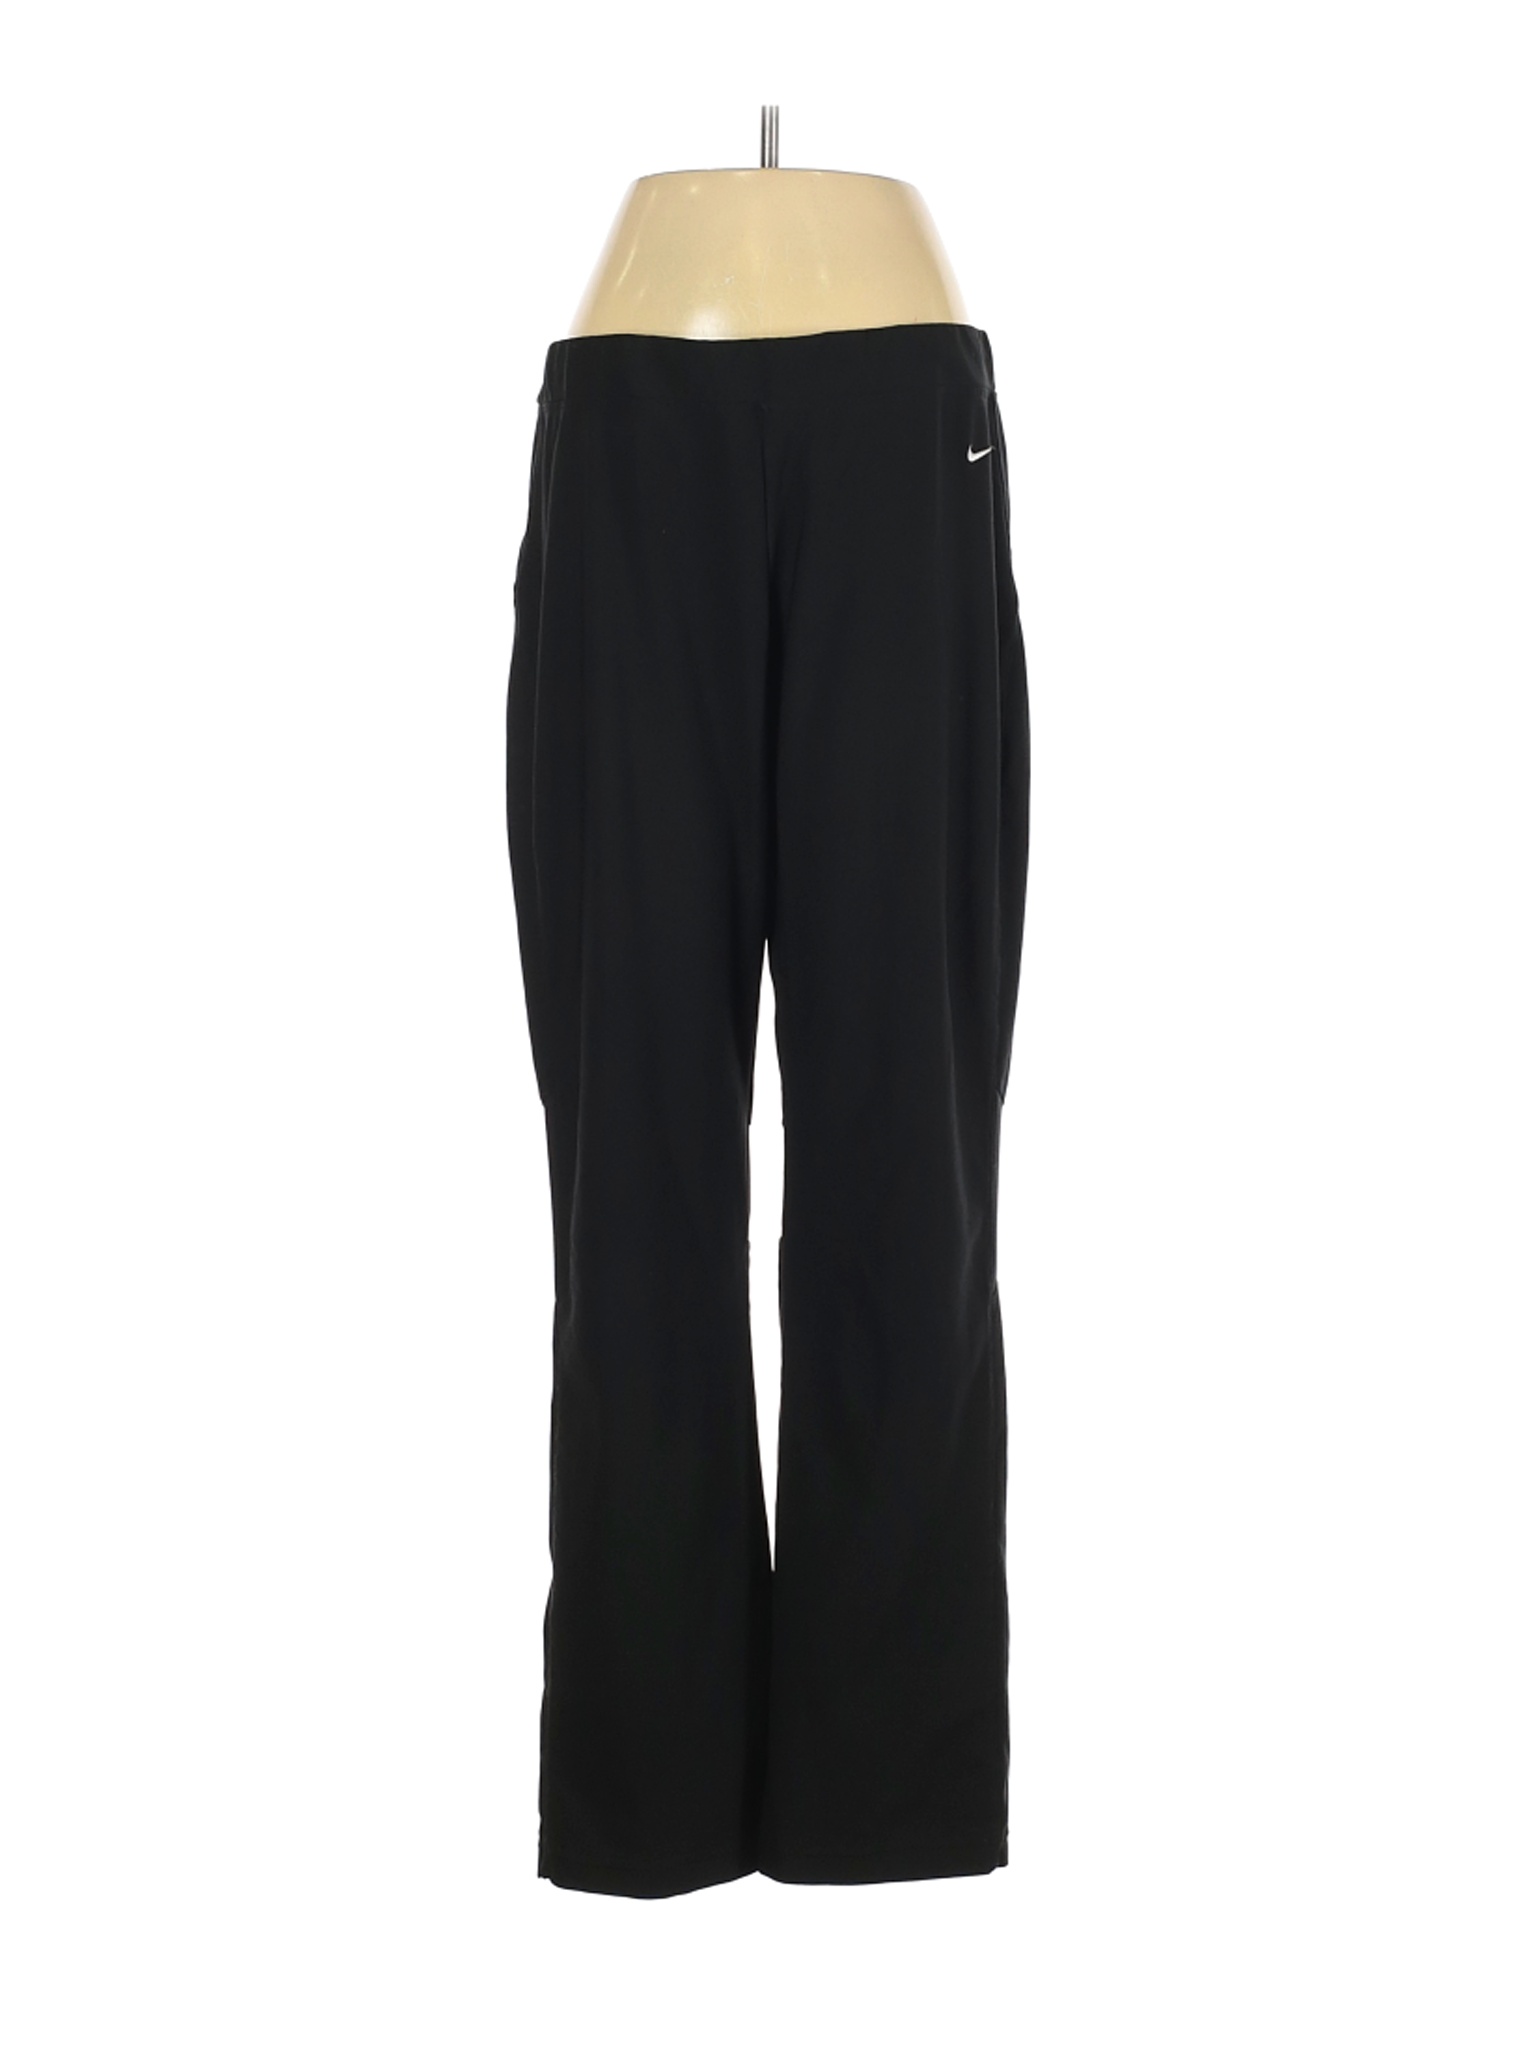 Nike Women Black Active Pants XL | eBay